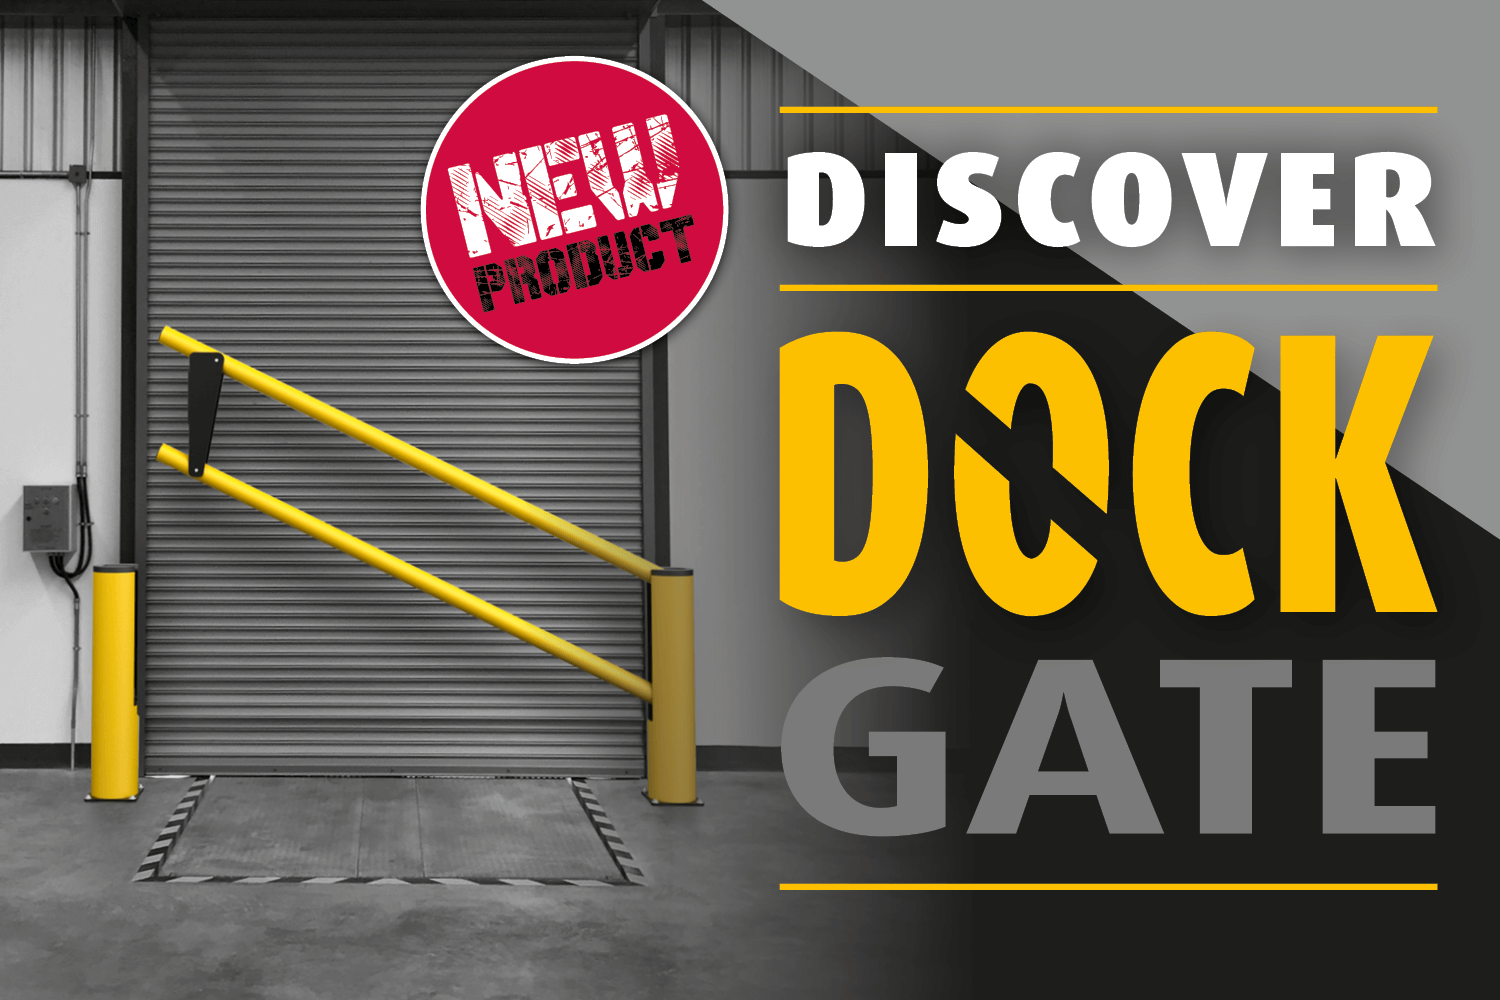 Dock Gate, anticollision protection for loading docks